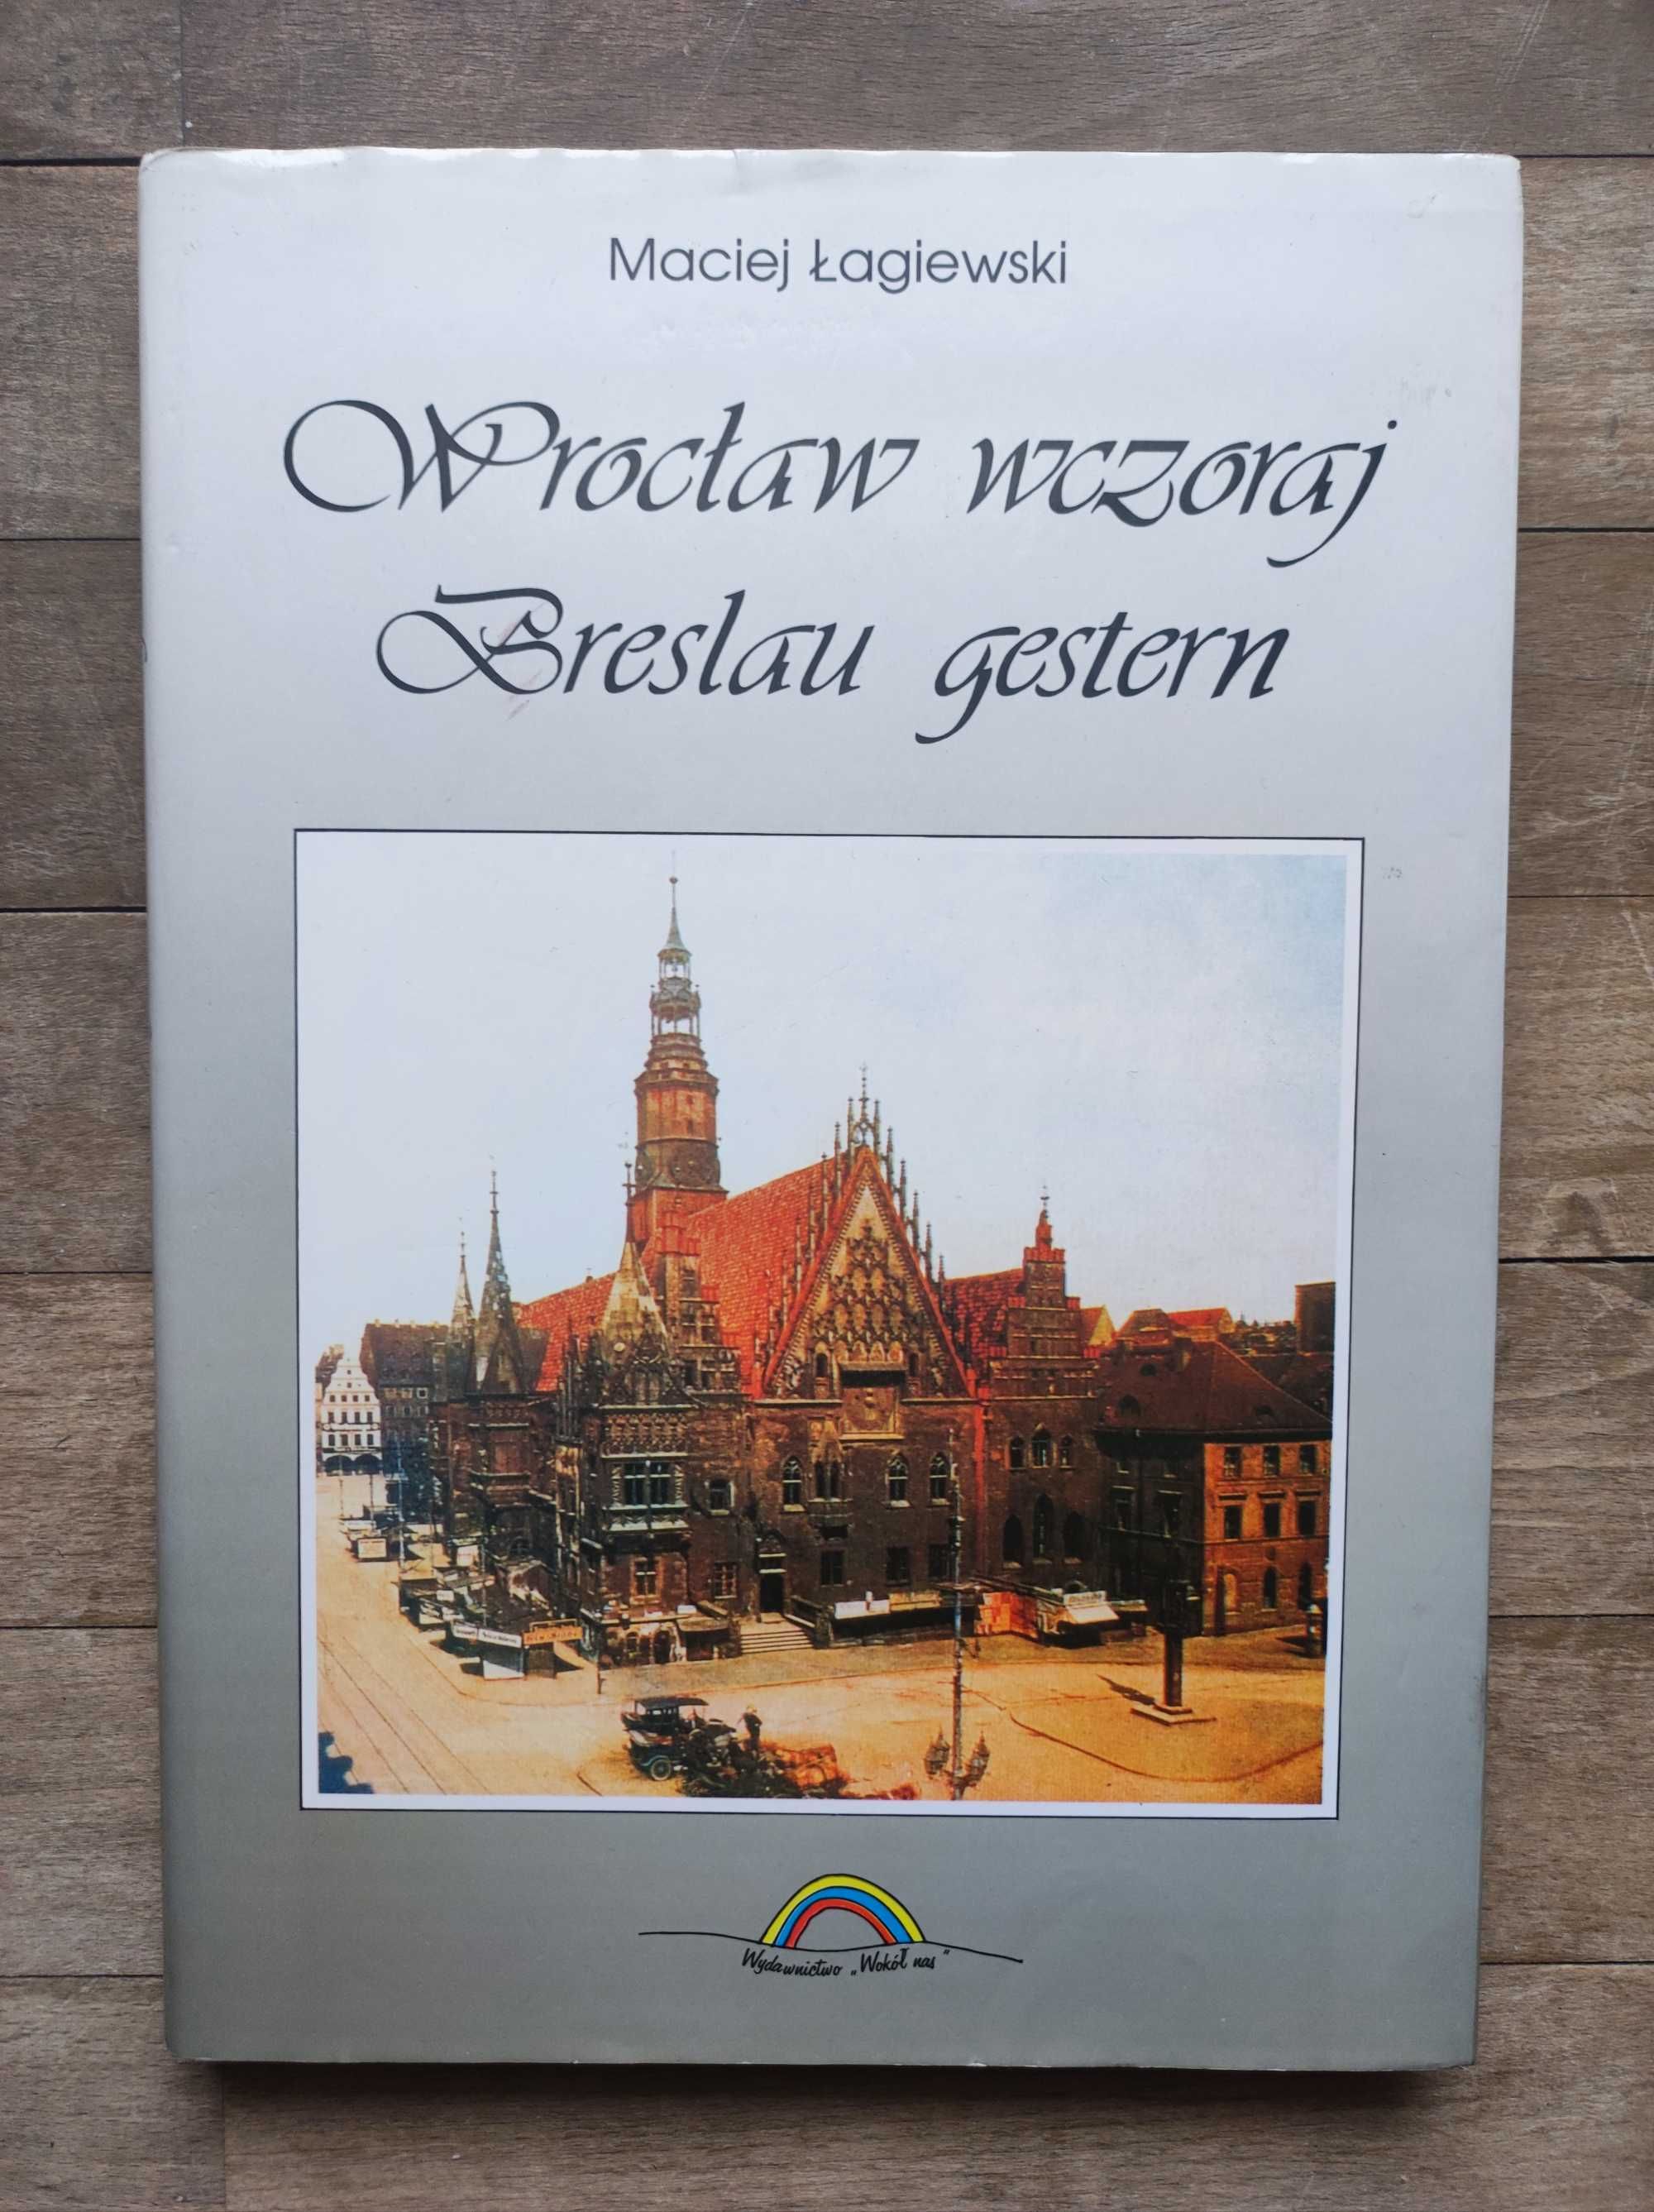 Albumy o Wrocławiu